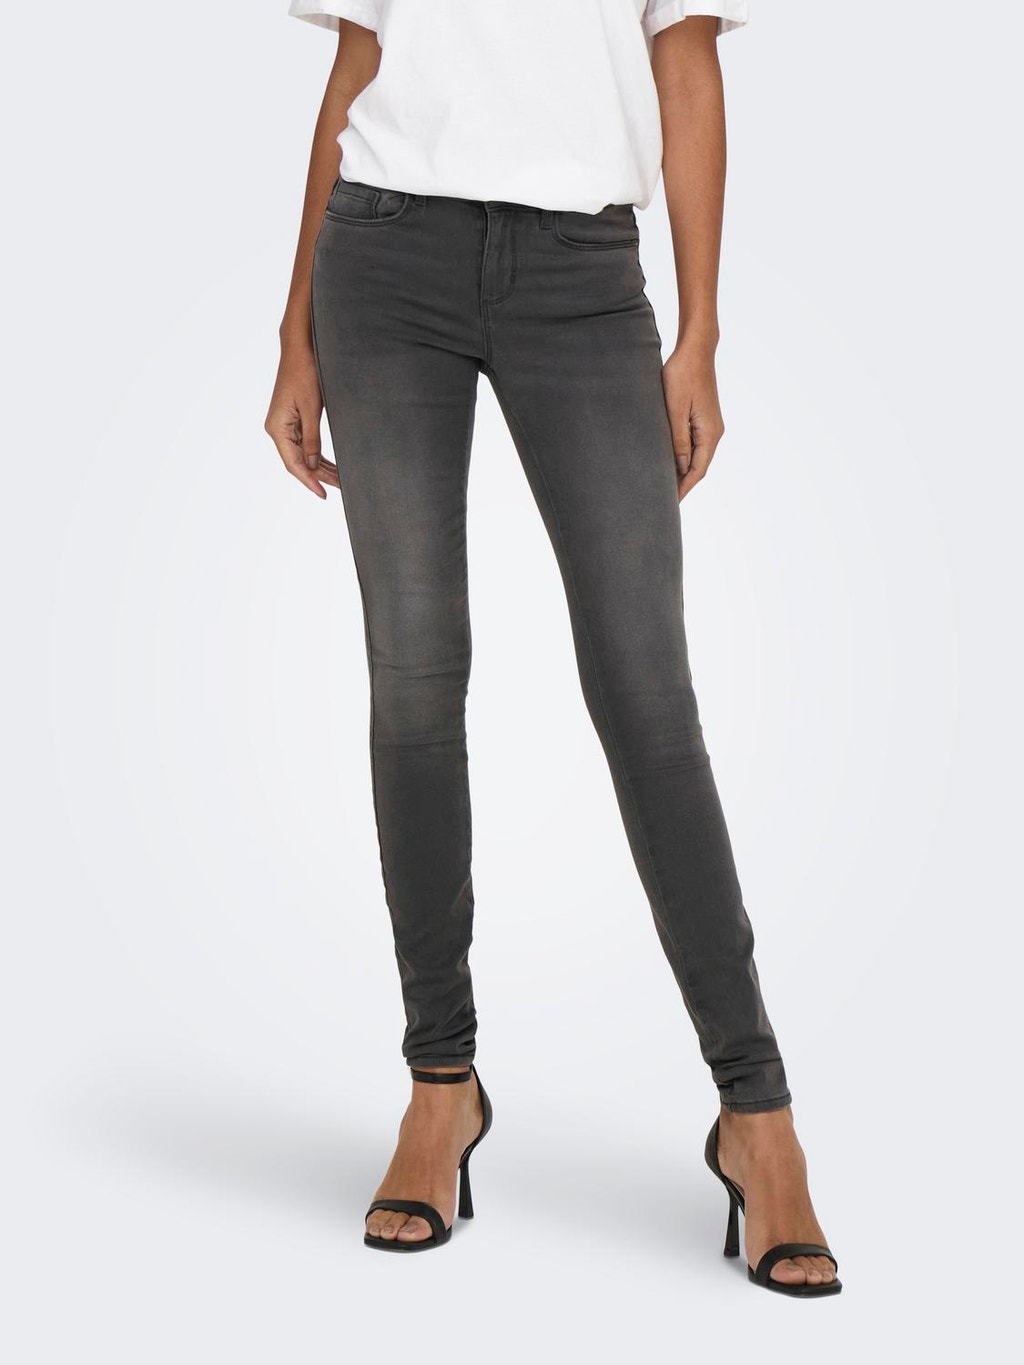 Zeug Site lijn werkelijk ONLRoyal reg Skinny jeans | Donkergrijs | ONLY®